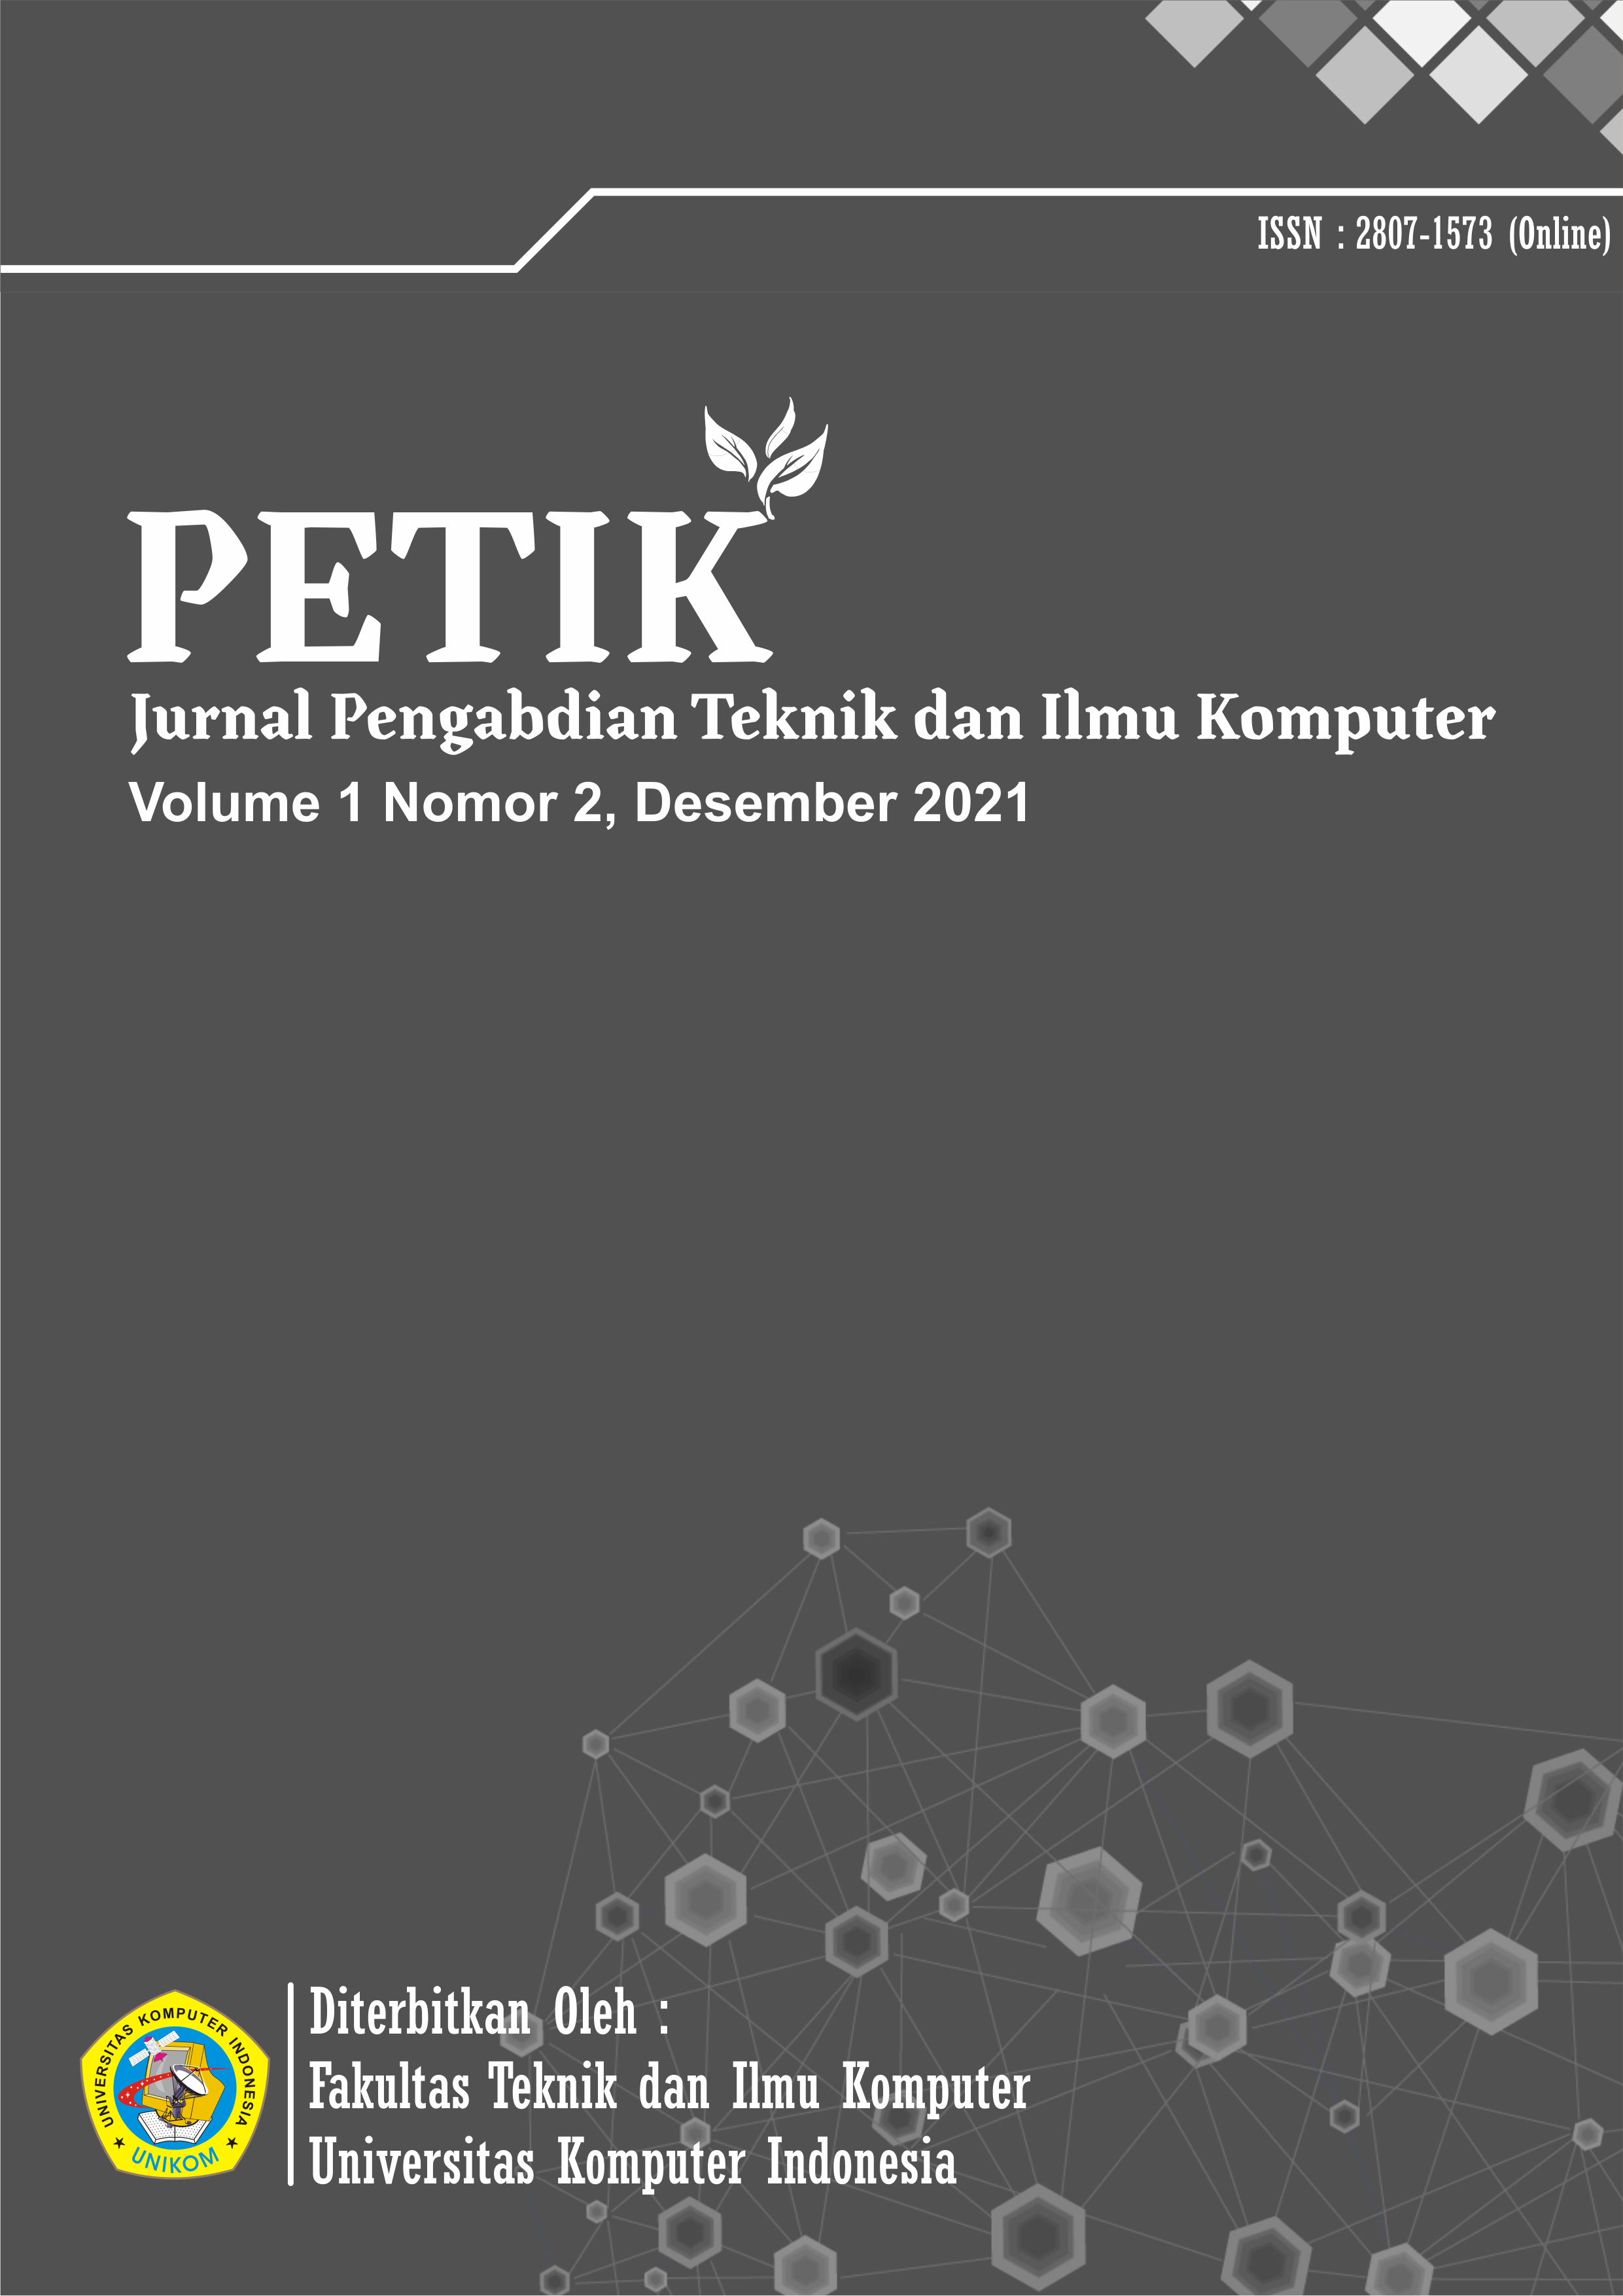 PETIK Vol 1 No 2 Desember 2021